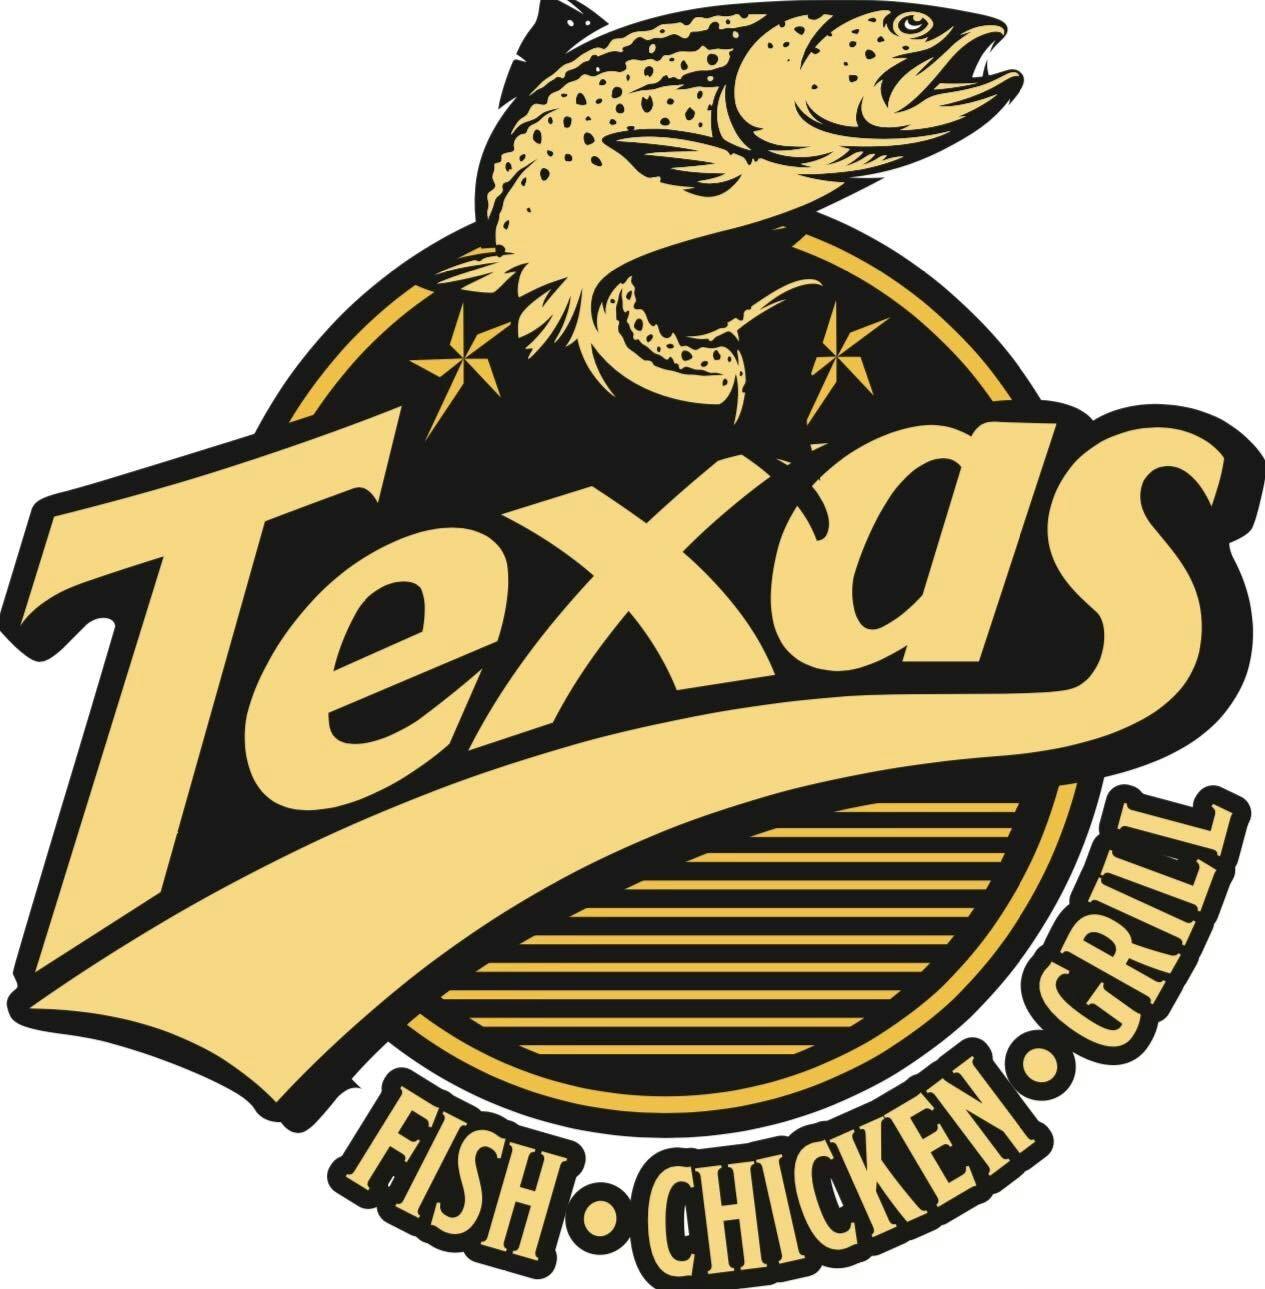 Texas Fish Chicken Grill